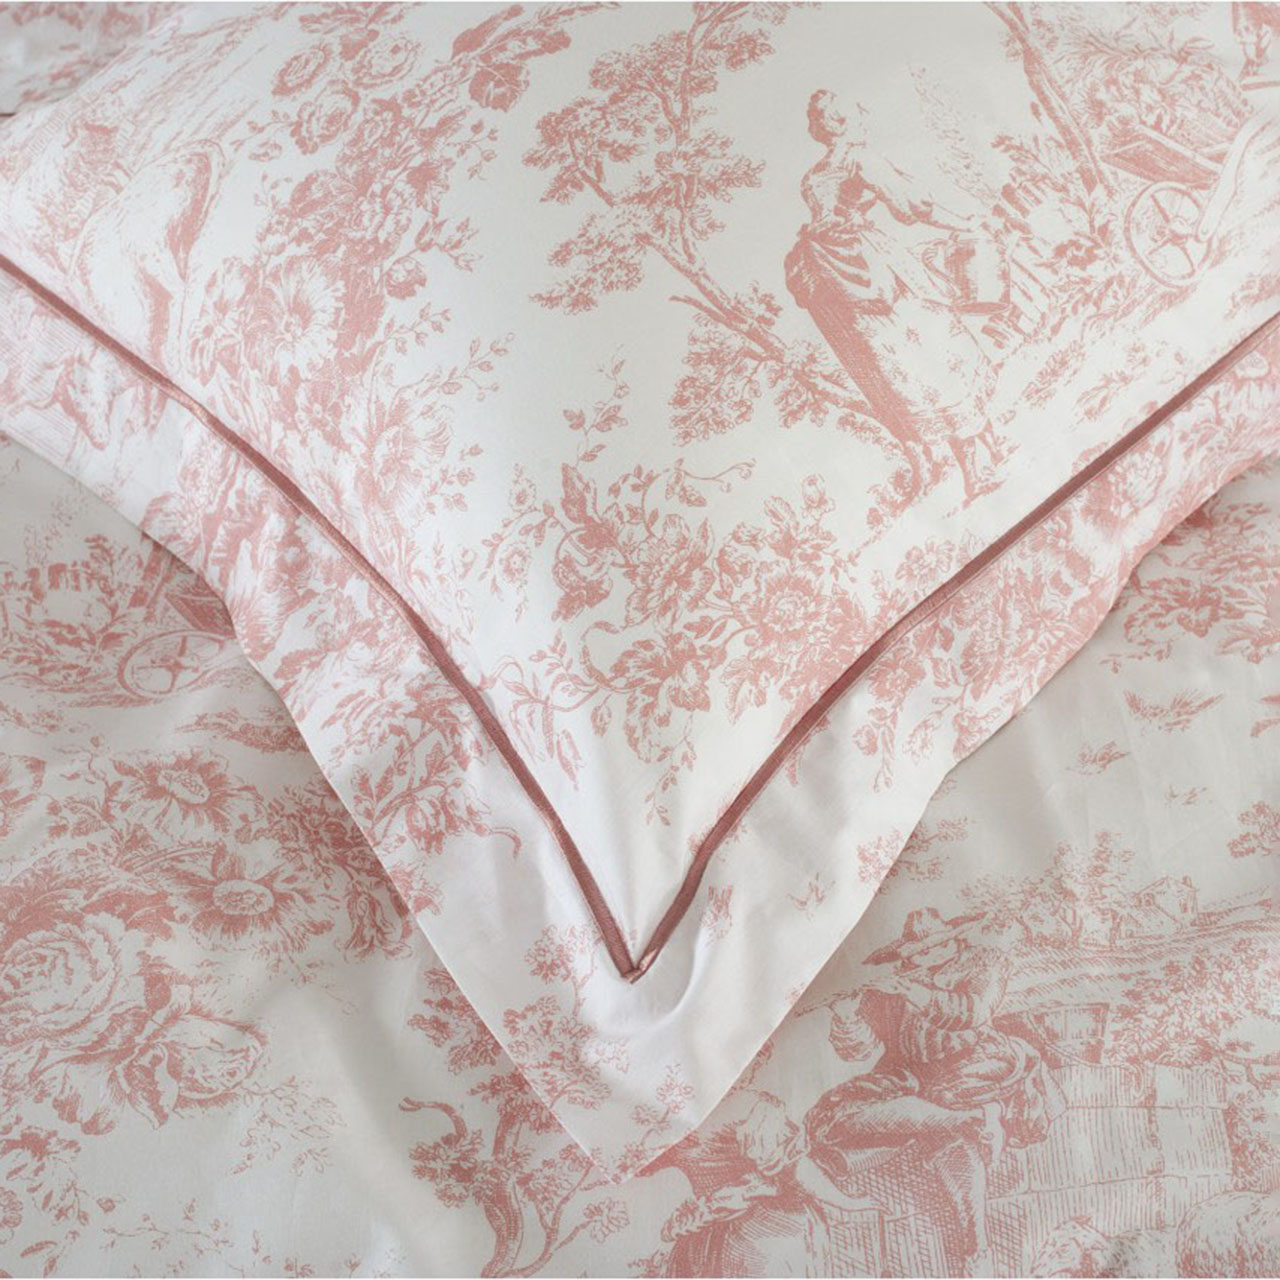 Toile-de-Jouy Oxford Pillowcases - Pair